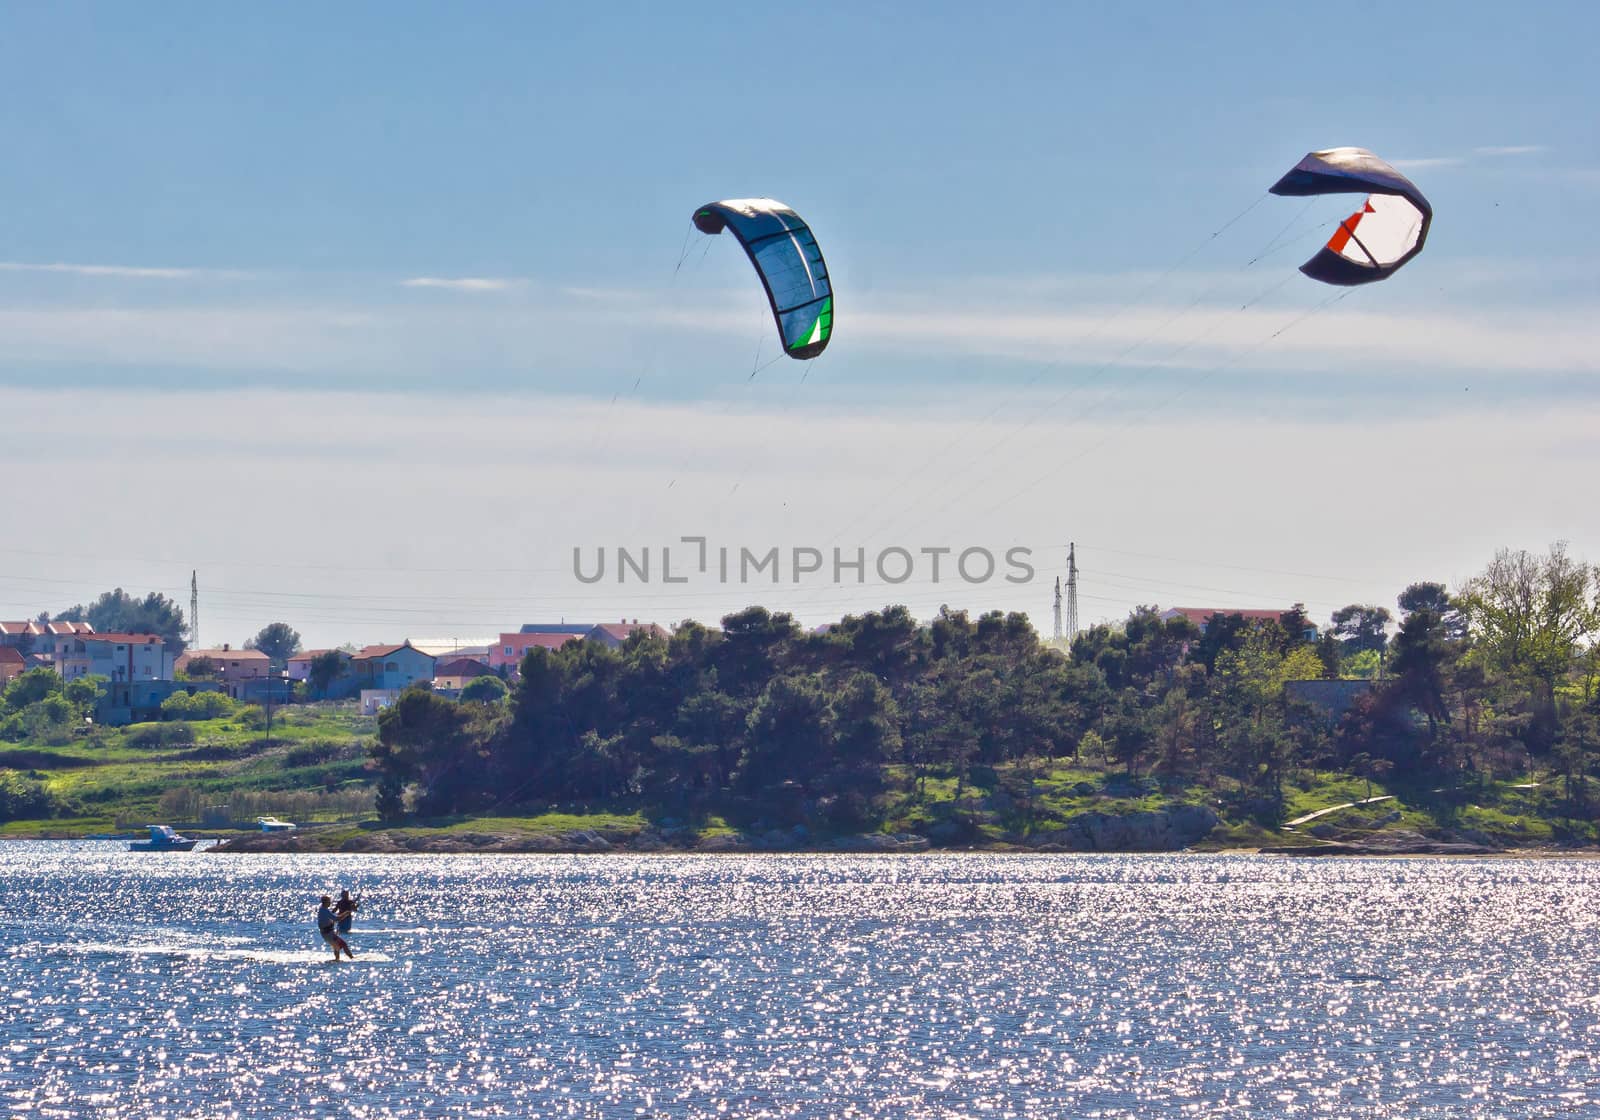 Pair of kitesurfers in Croatia by xbrchx